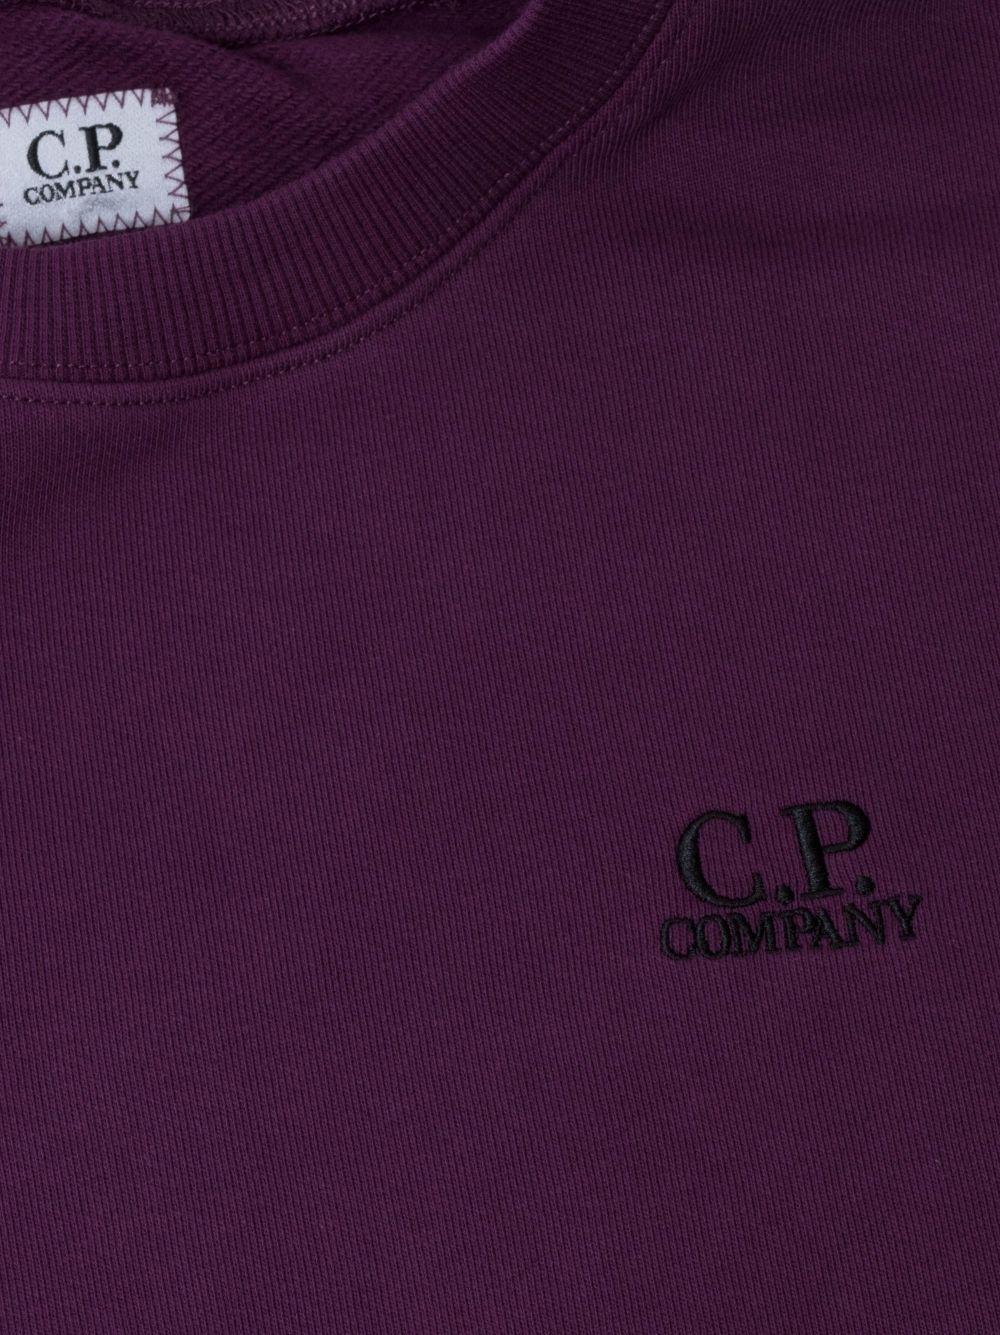 Purple Company Logo - C.P. Company Purple Sweatshirt | Designerwear